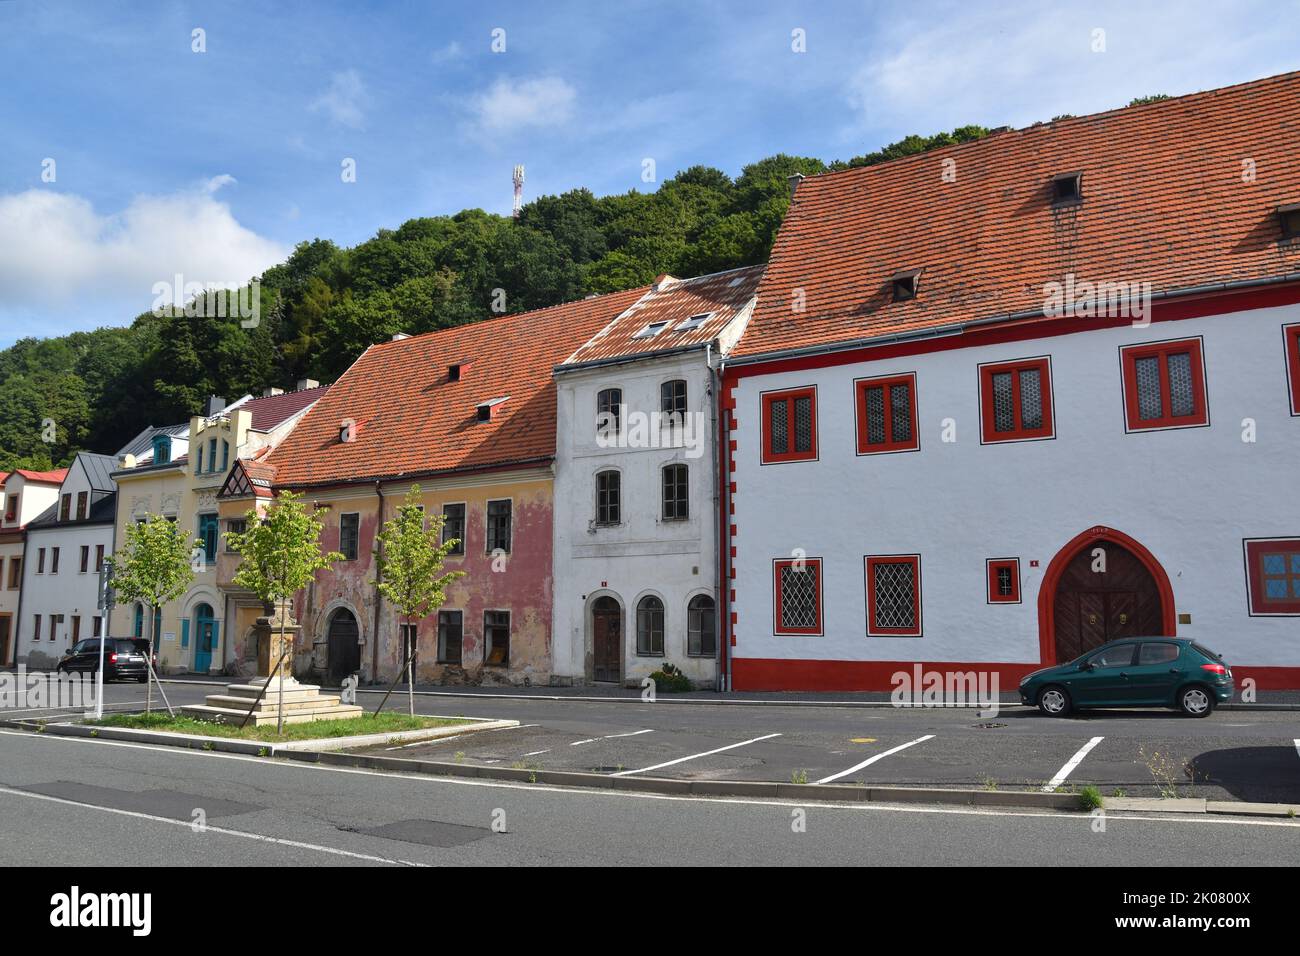 Medieval town of Horni Slavkov (Schlaggenwald) in Bohemia, Czech Republic: part of the old center Stock Photo